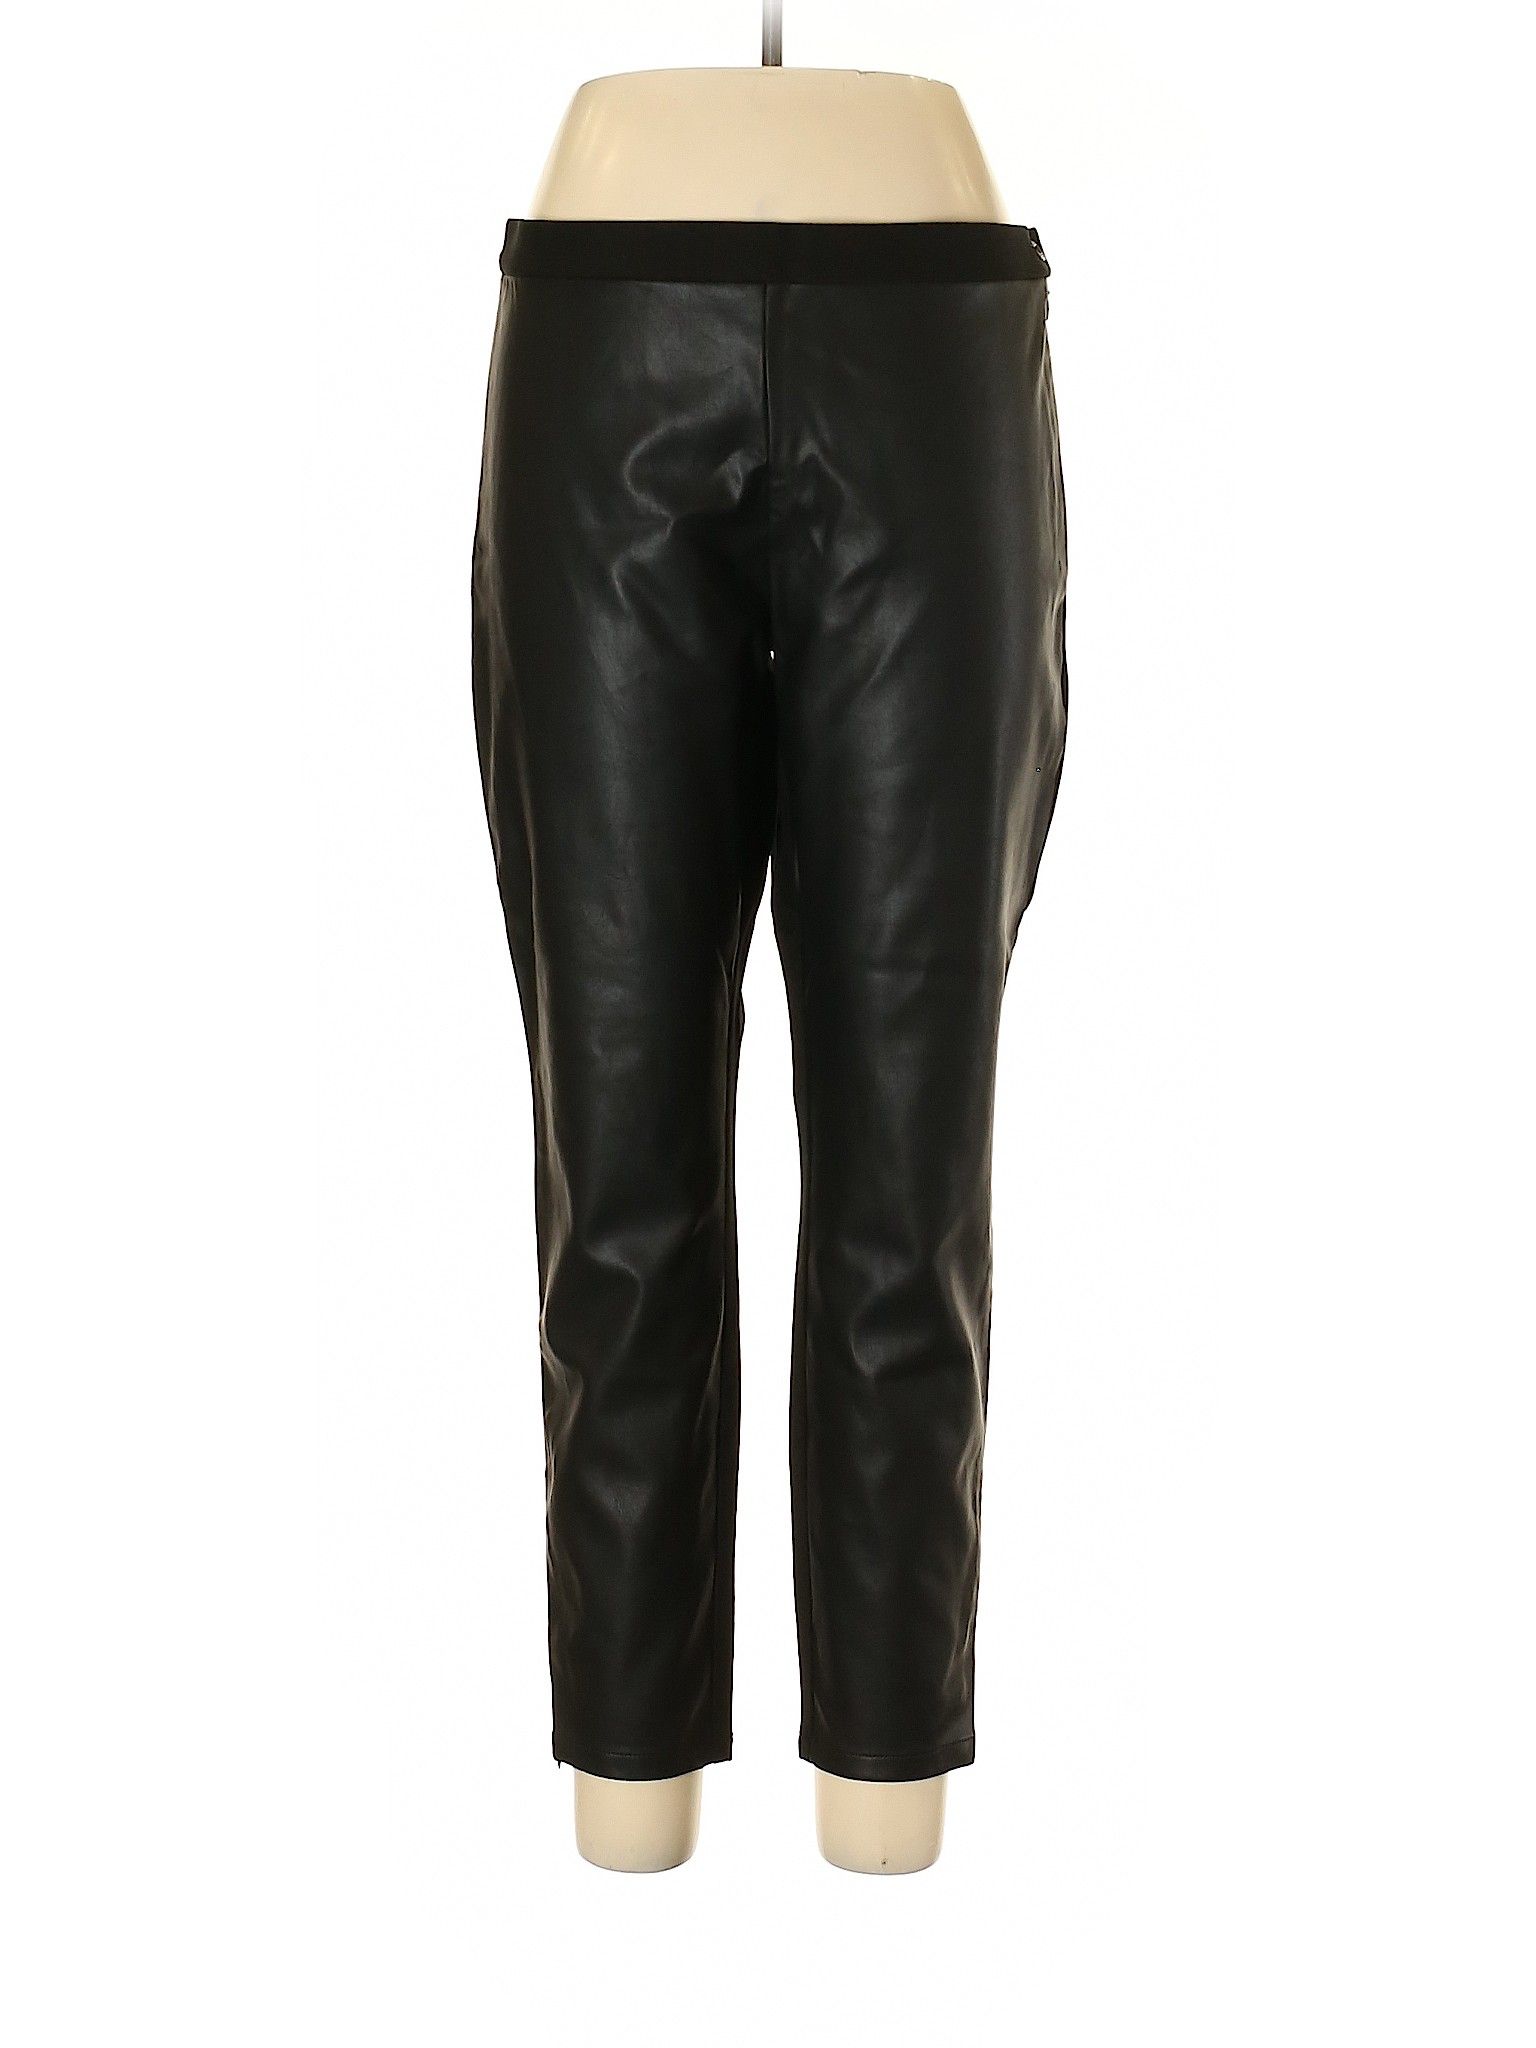 Banana Republic Faux Leather Pants Size 12: Black Women's Bottoms - 51793495 | thredUP